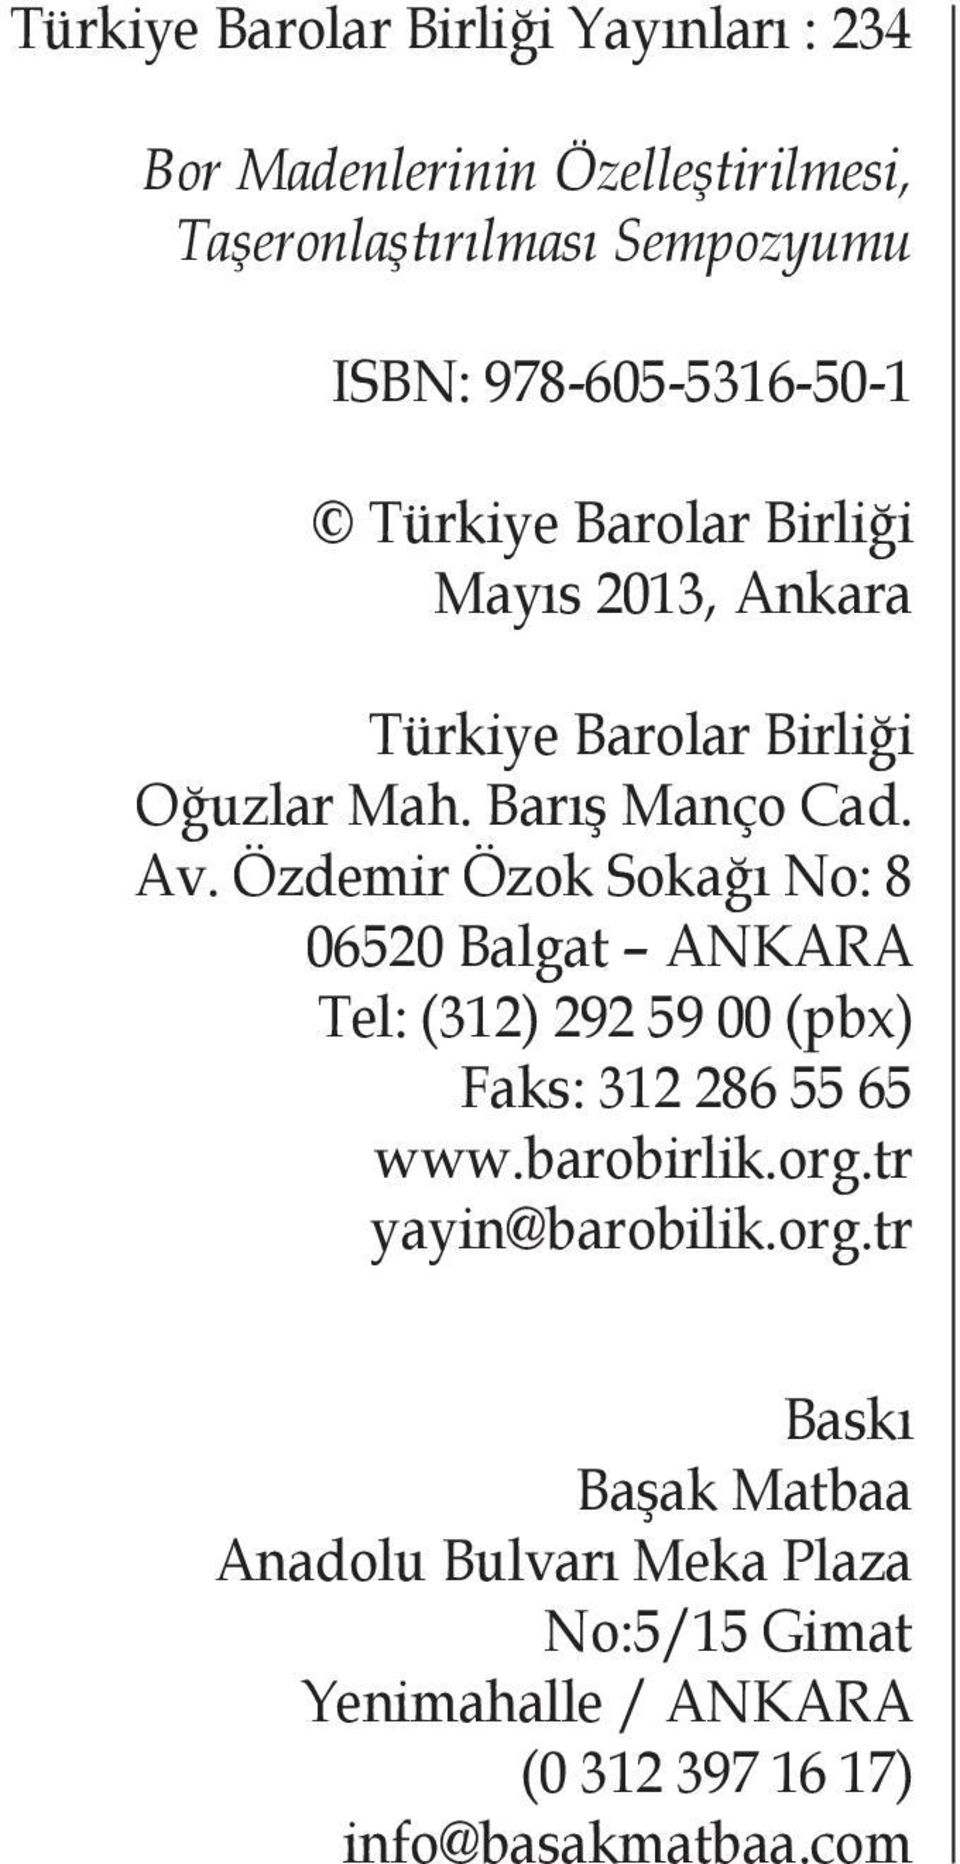 Özdemir Özok Sokağı No: 8 06520 Balgat ANKARA Tel: (312) 292 59 00 (pbx) Faks: 312 286 55 65 www.barobirlik.org.